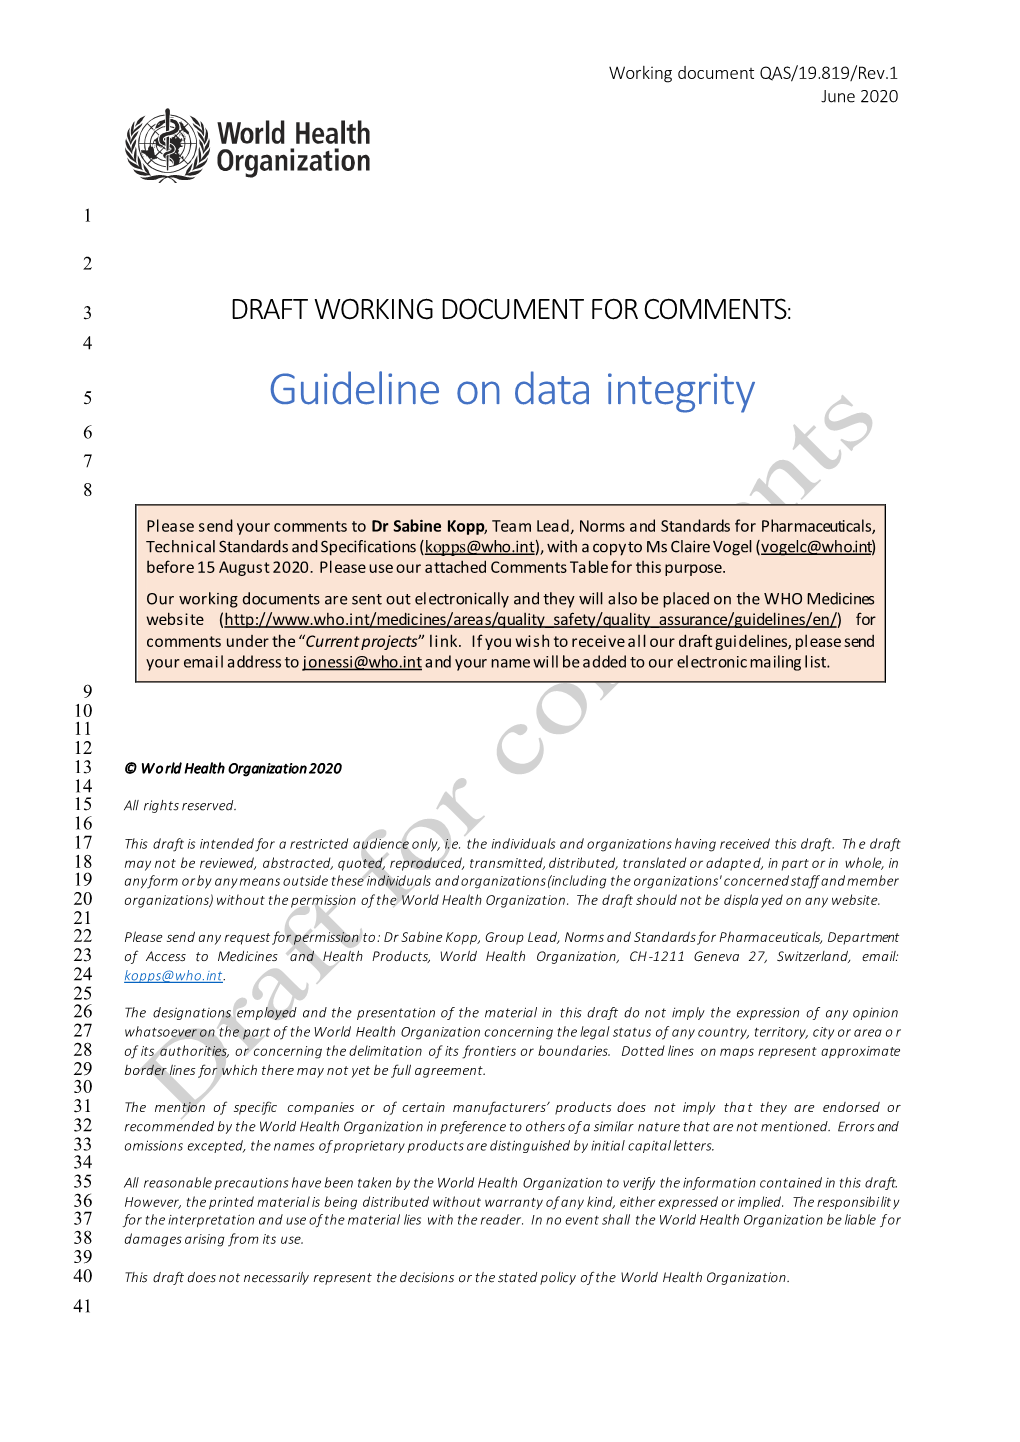 Guideline on Data Integrity